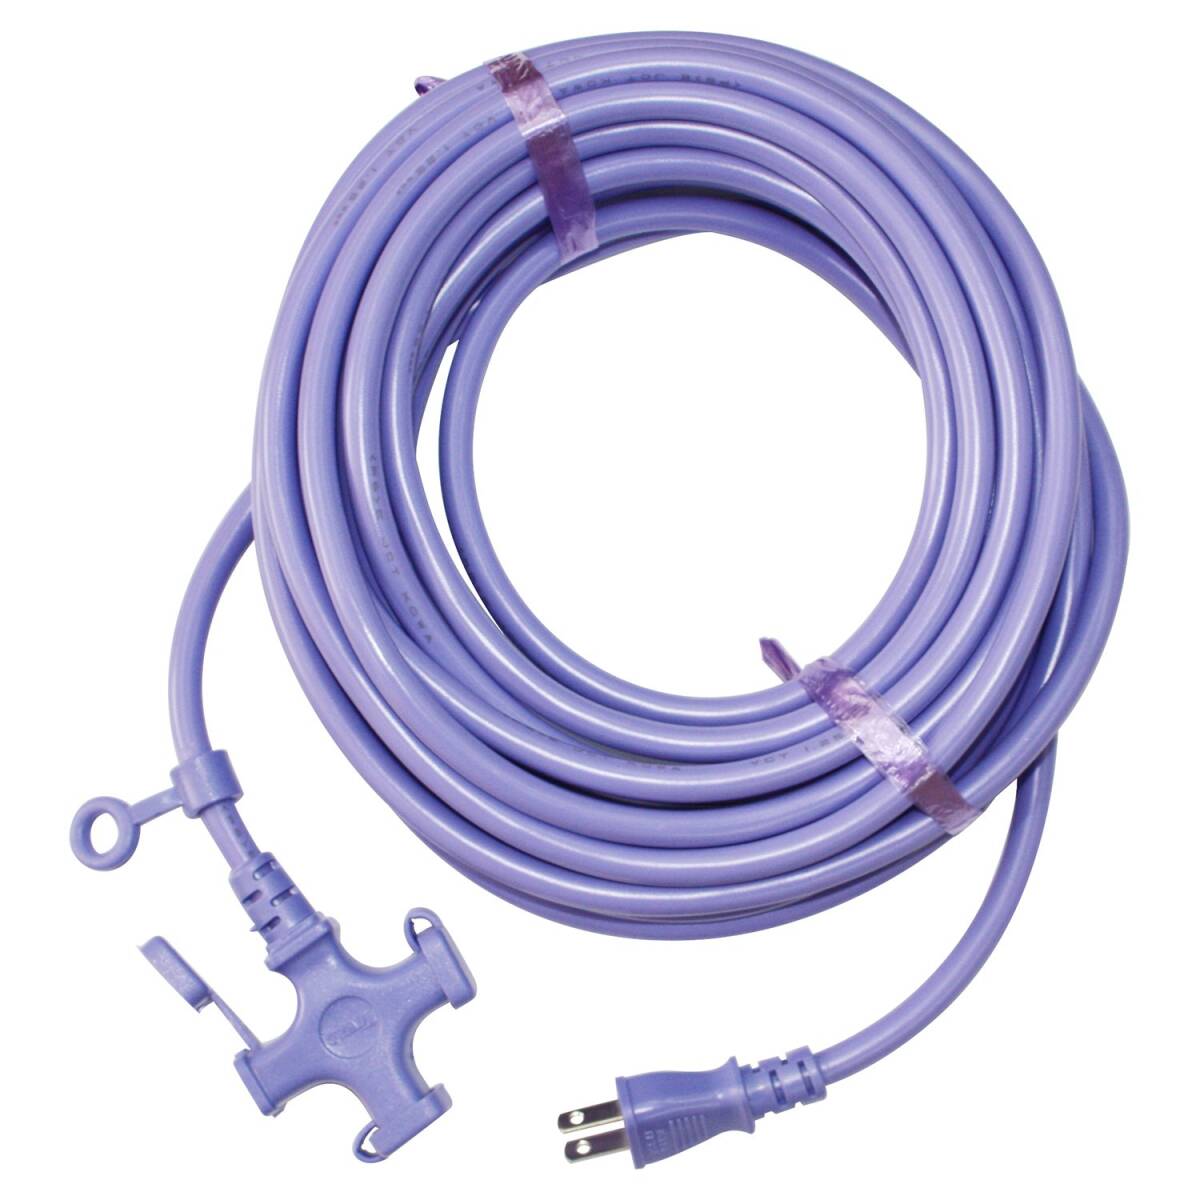  purple 10m standard type . peace industry kowa soft type extender 15A*10m 3tsu. purple KM03-1